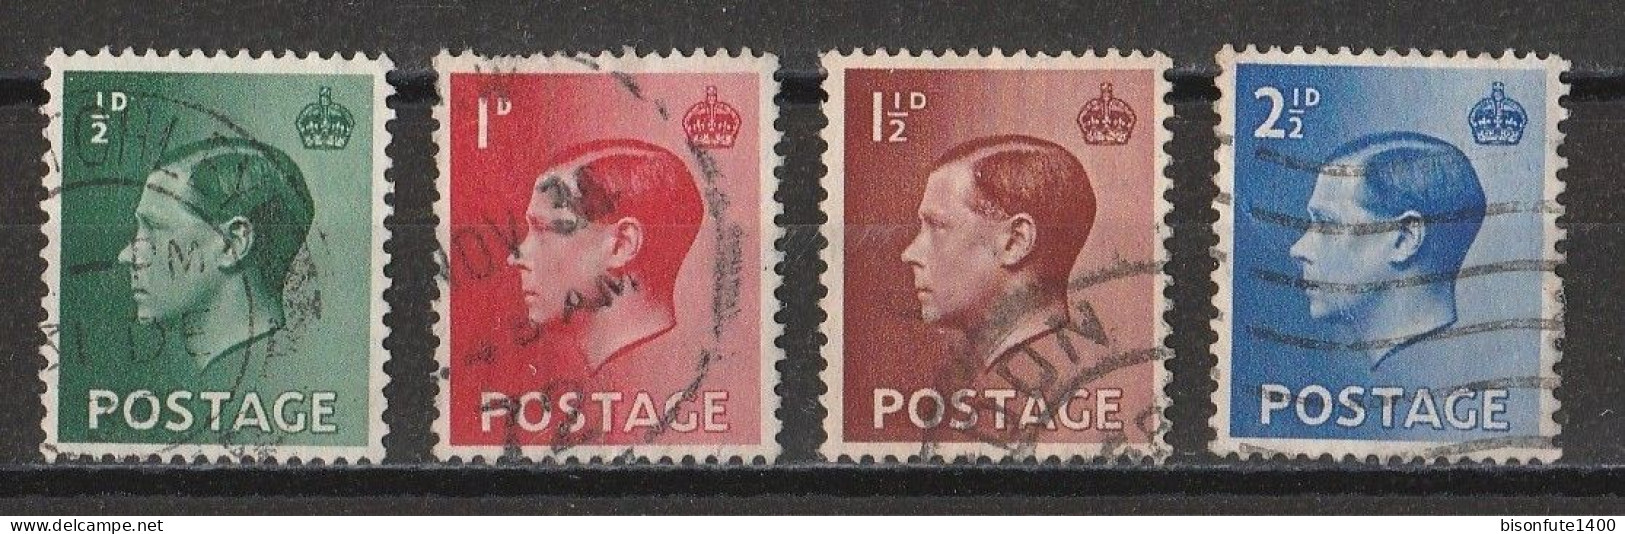 Grande-Bretagne 1936 : Timbres Yvert & Tellier N° 205 - 206 - 207 Et 208 Oblitérés. - Gebraucht